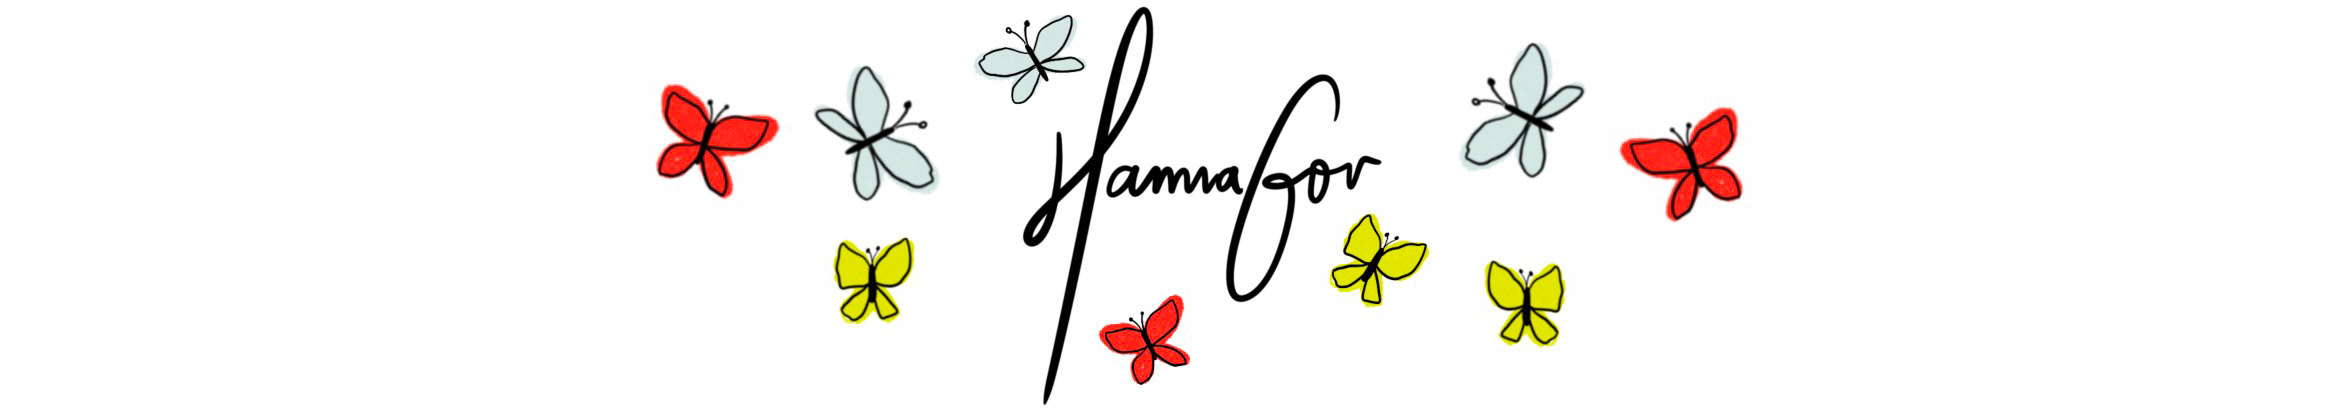 Hanna Gov's profile banner